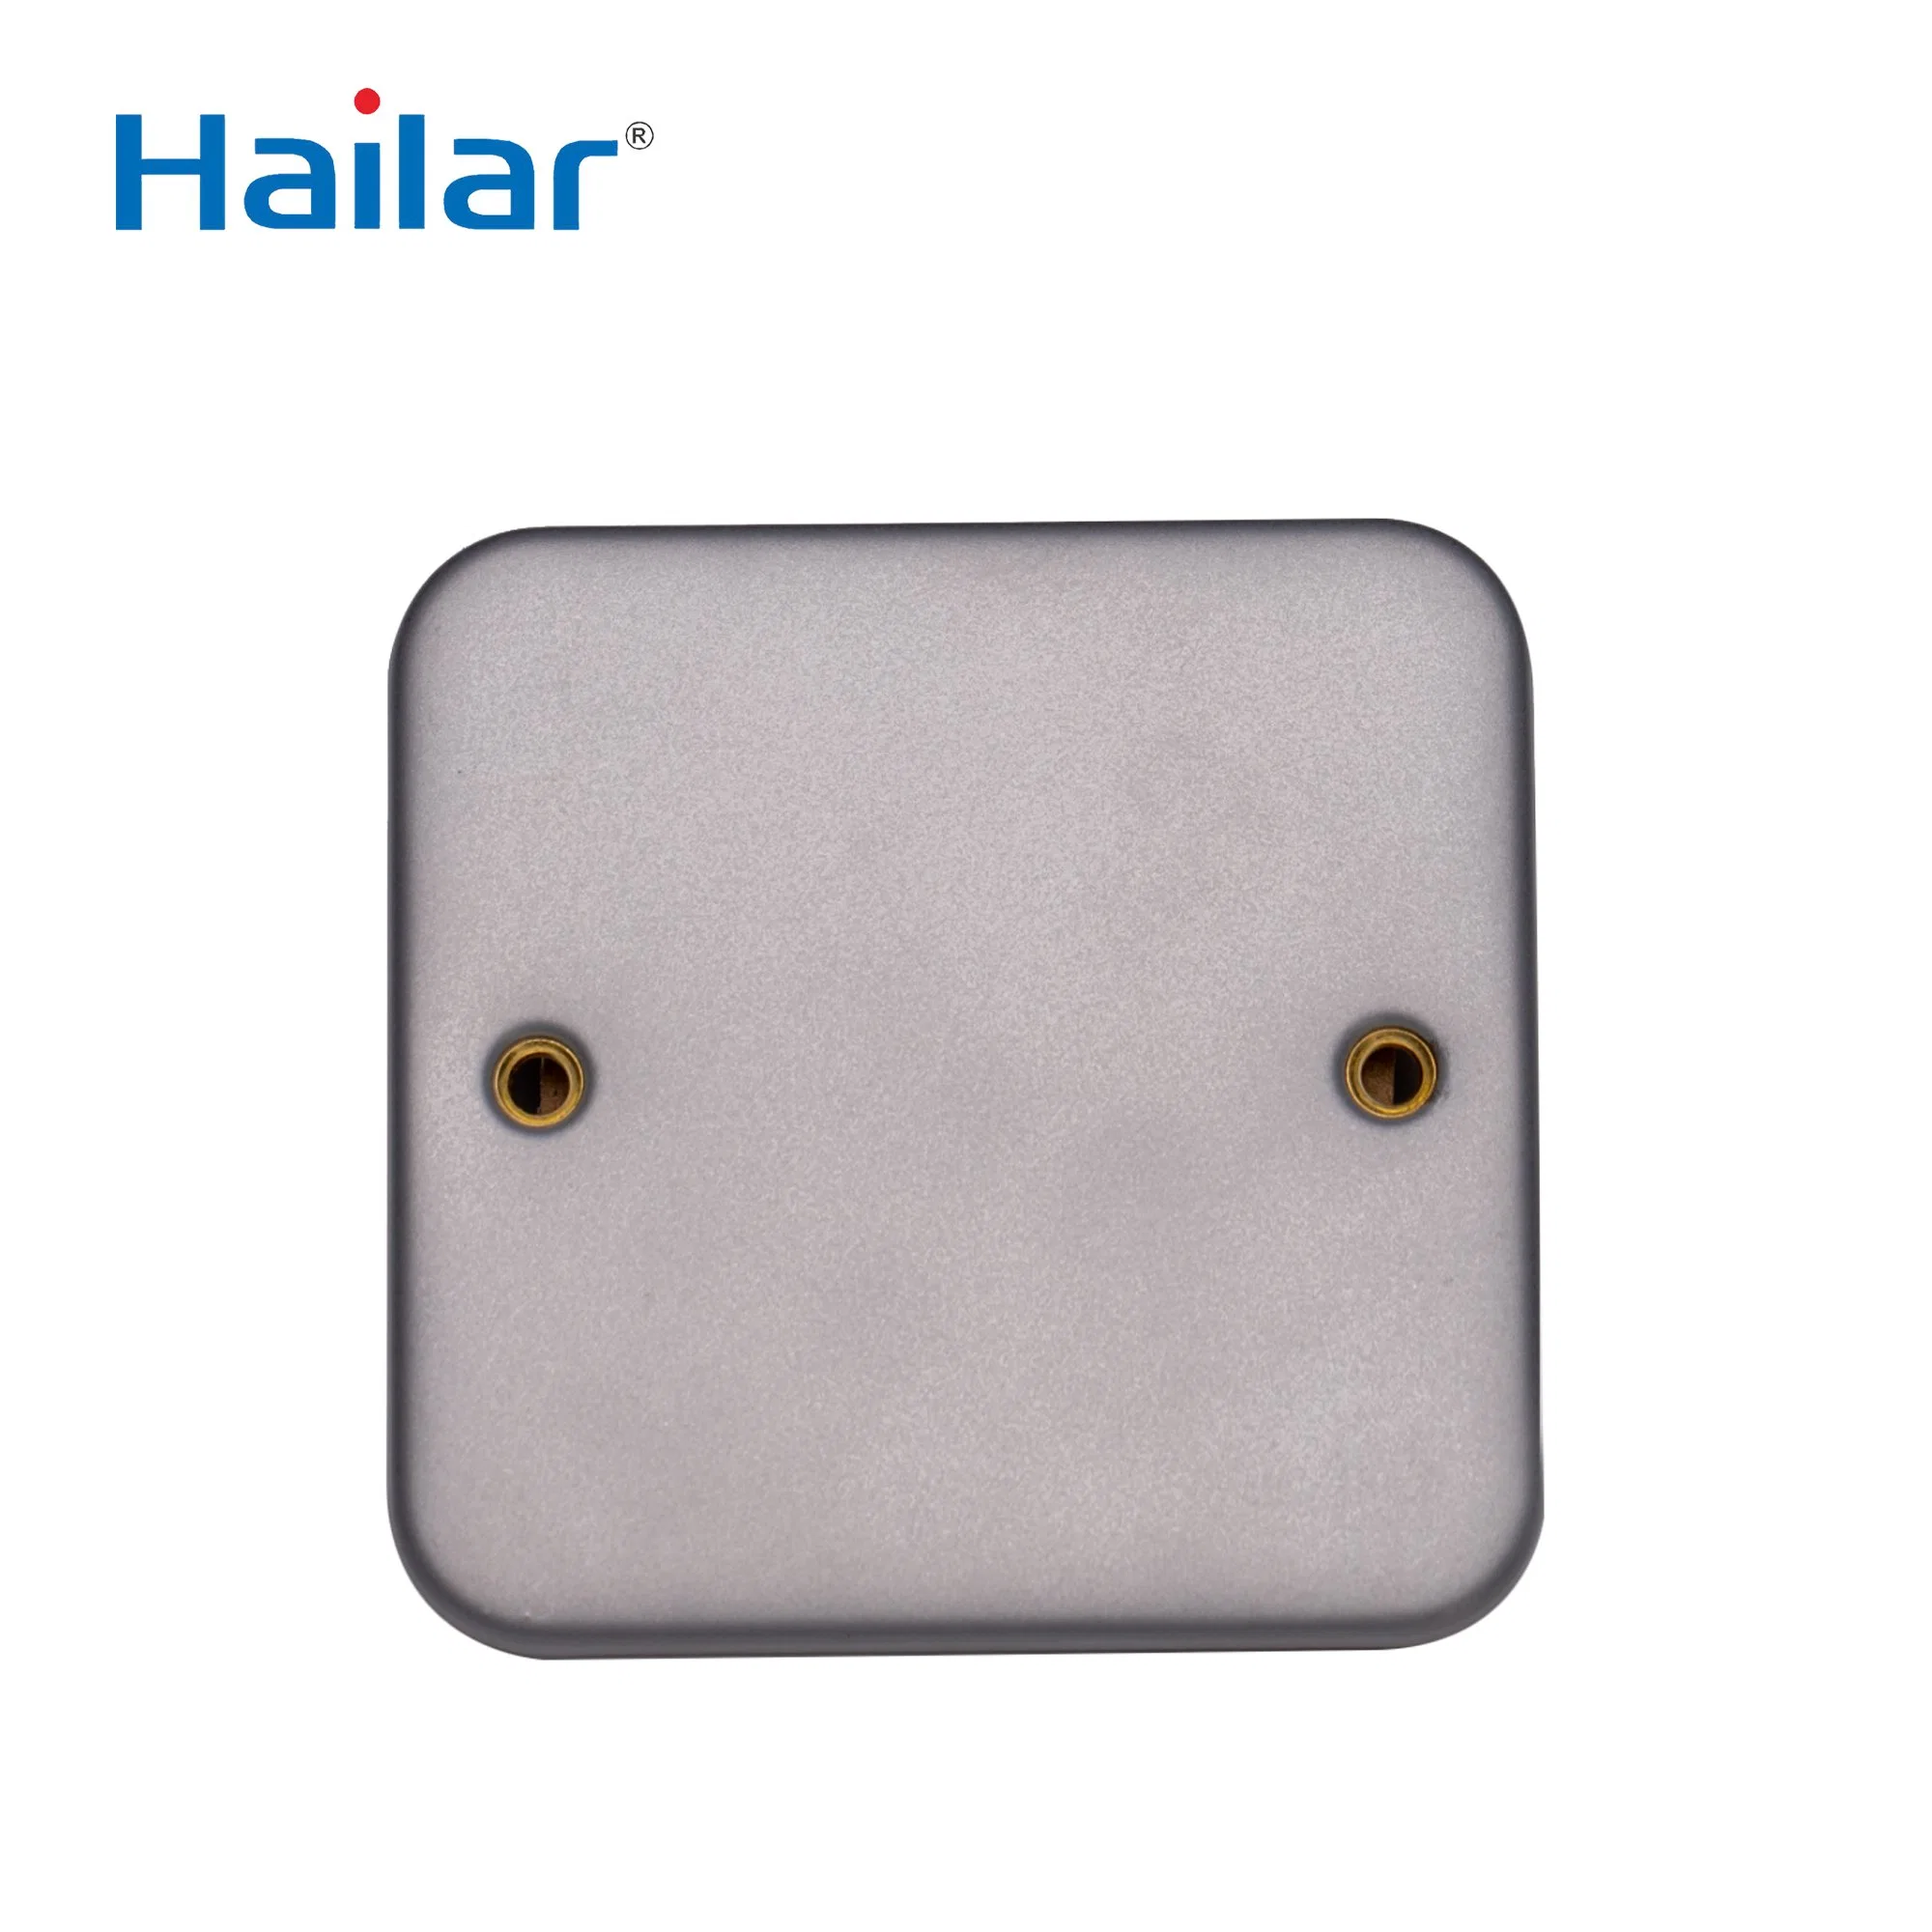 Hailar Metal Blank Wall Switch Plate